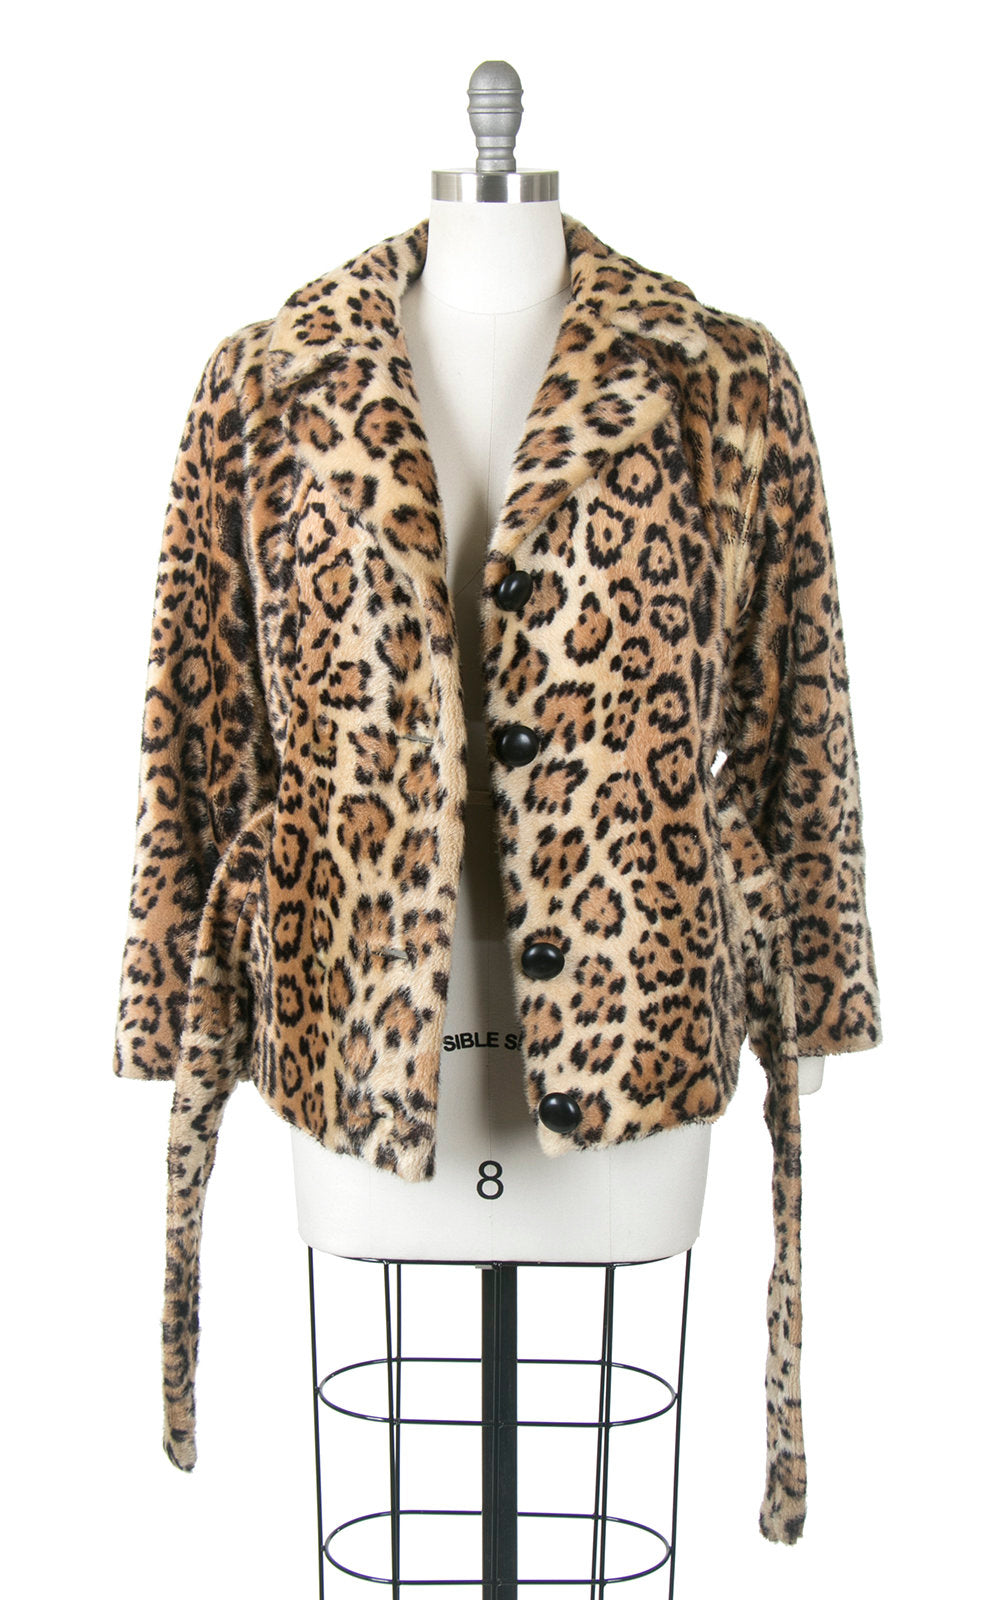 Vintage 1960s Coat | 60s Leopard Print Faux Fur Belted Animal Print Short Winter Jacket (small/medium)